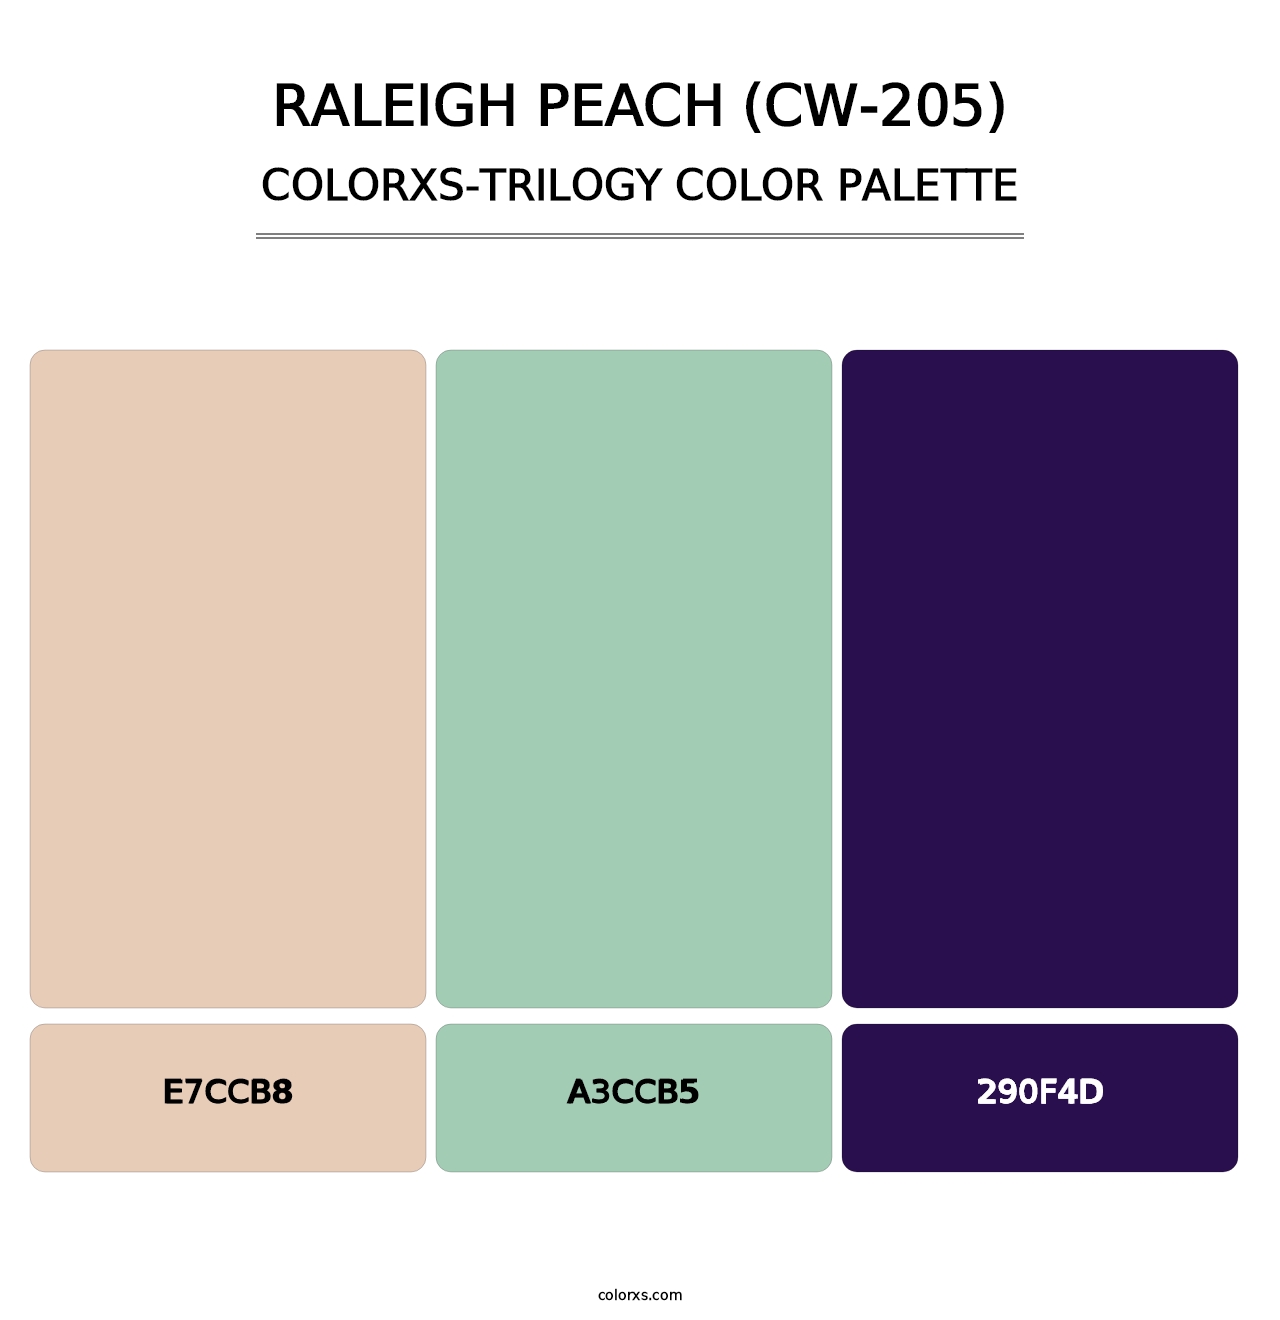 Raleigh Peach (CW-205) - Colorxs Trilogy Palette